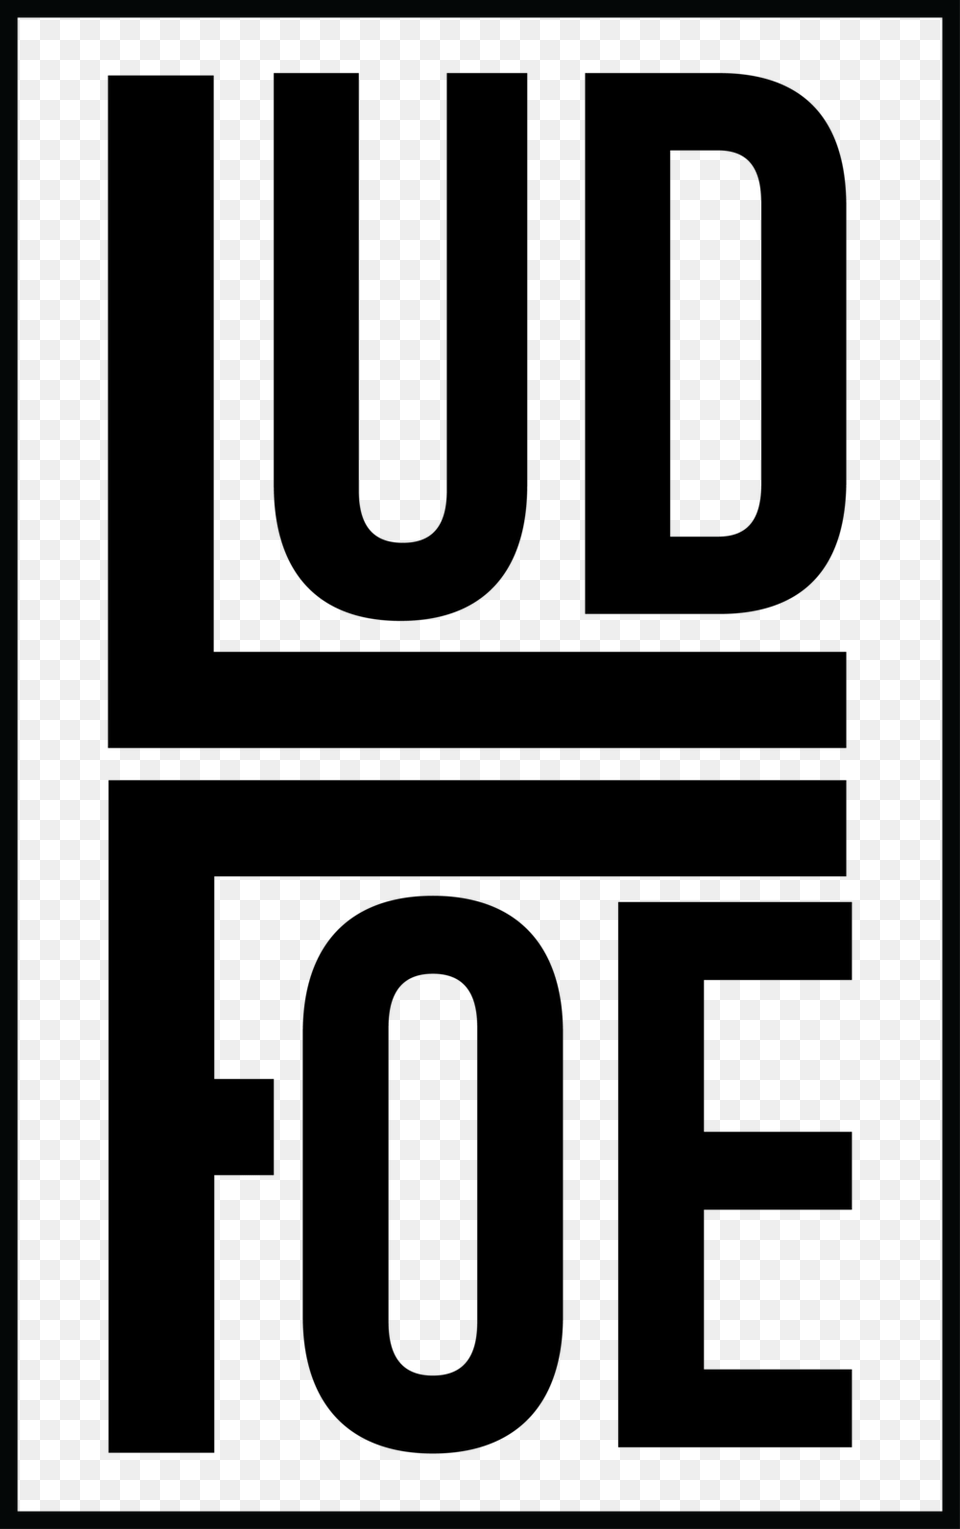 Image Result For Lud Foe Logo No Hooks 2 Lud Foe Free Transparent Png